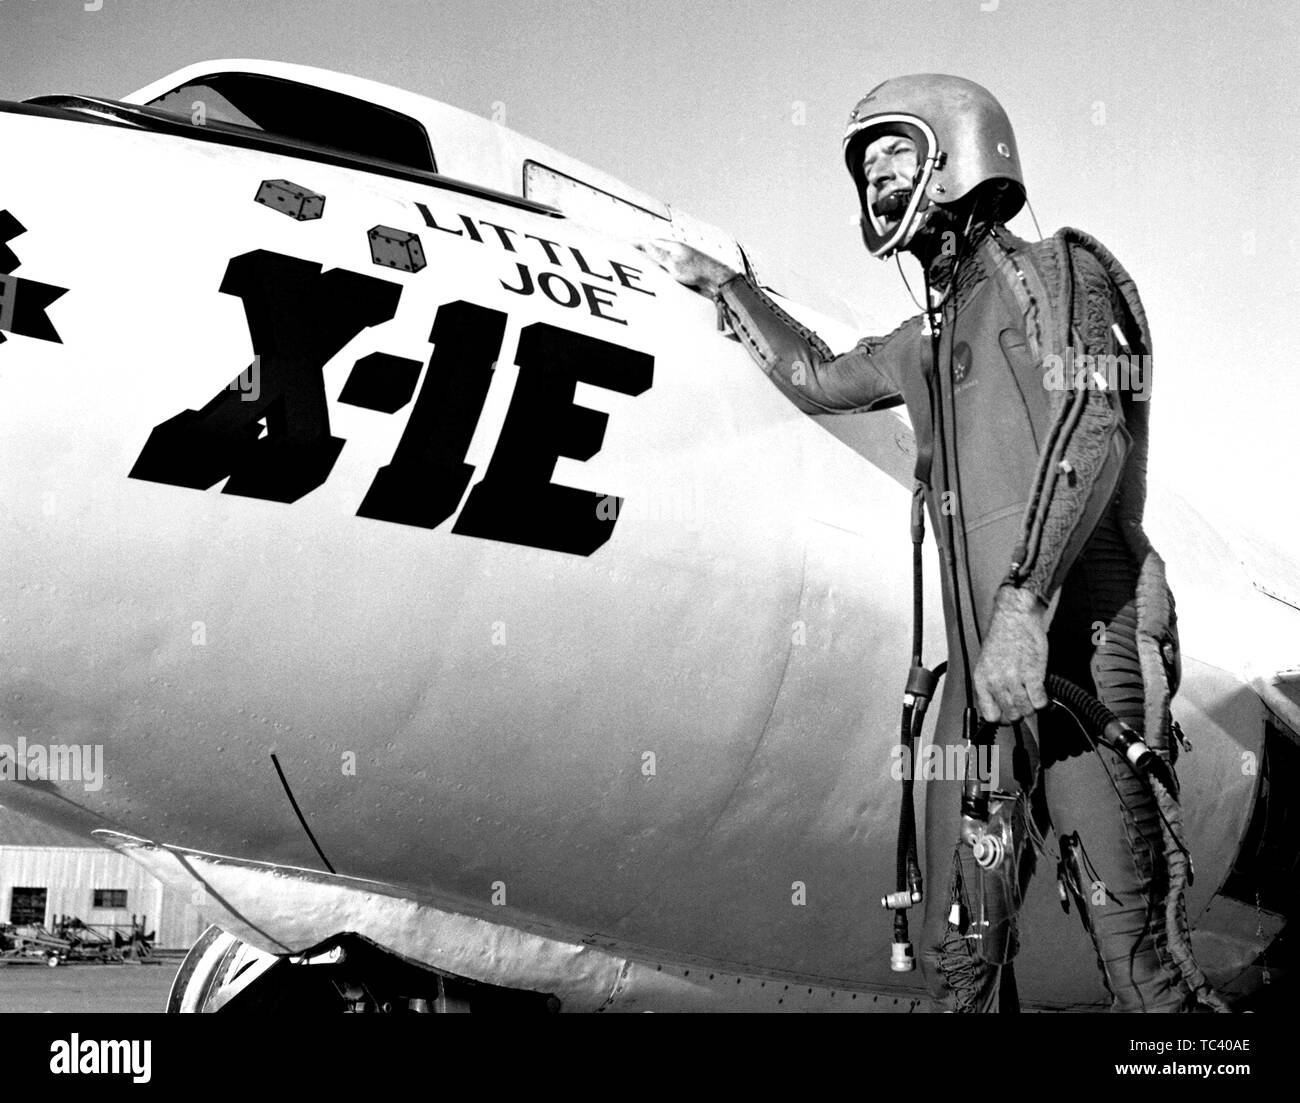 Pilot Joe Walker poses next to the X-1E aircraft at the NASA High-Speed Flight Station, Edwards, California, 1958. Image courtesy National Aeronautics and Space Administration (NASA). () Stock Photo